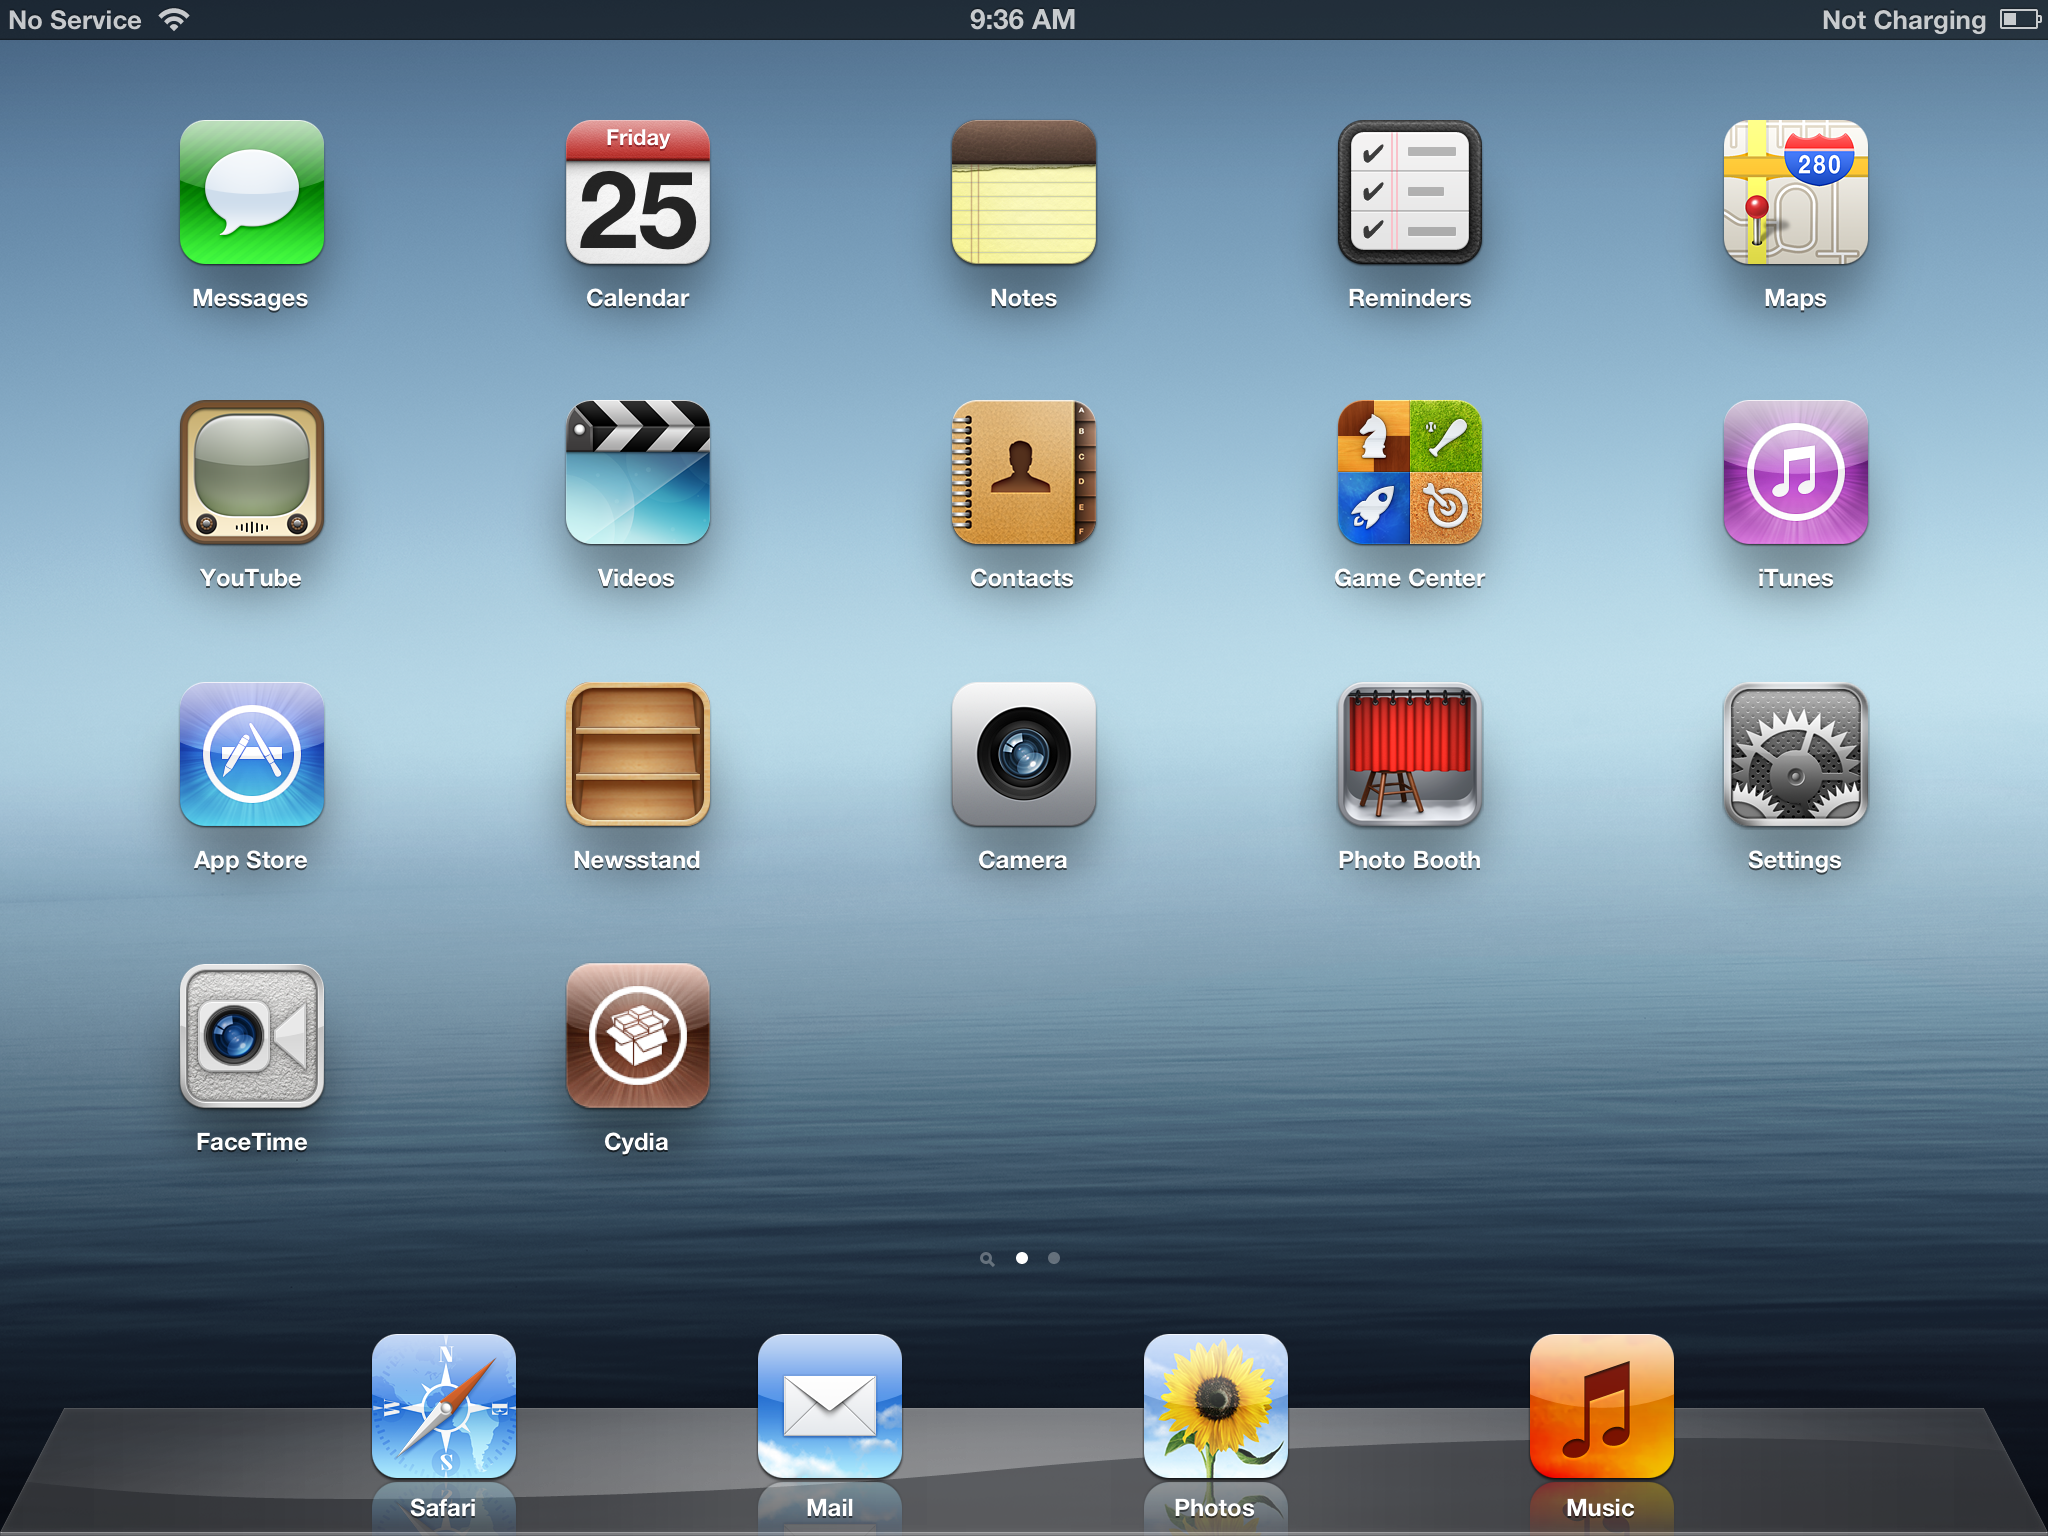 How to Jailbreak Your iPad Using Absinthe 2.0 (Mac) [5.1.1]